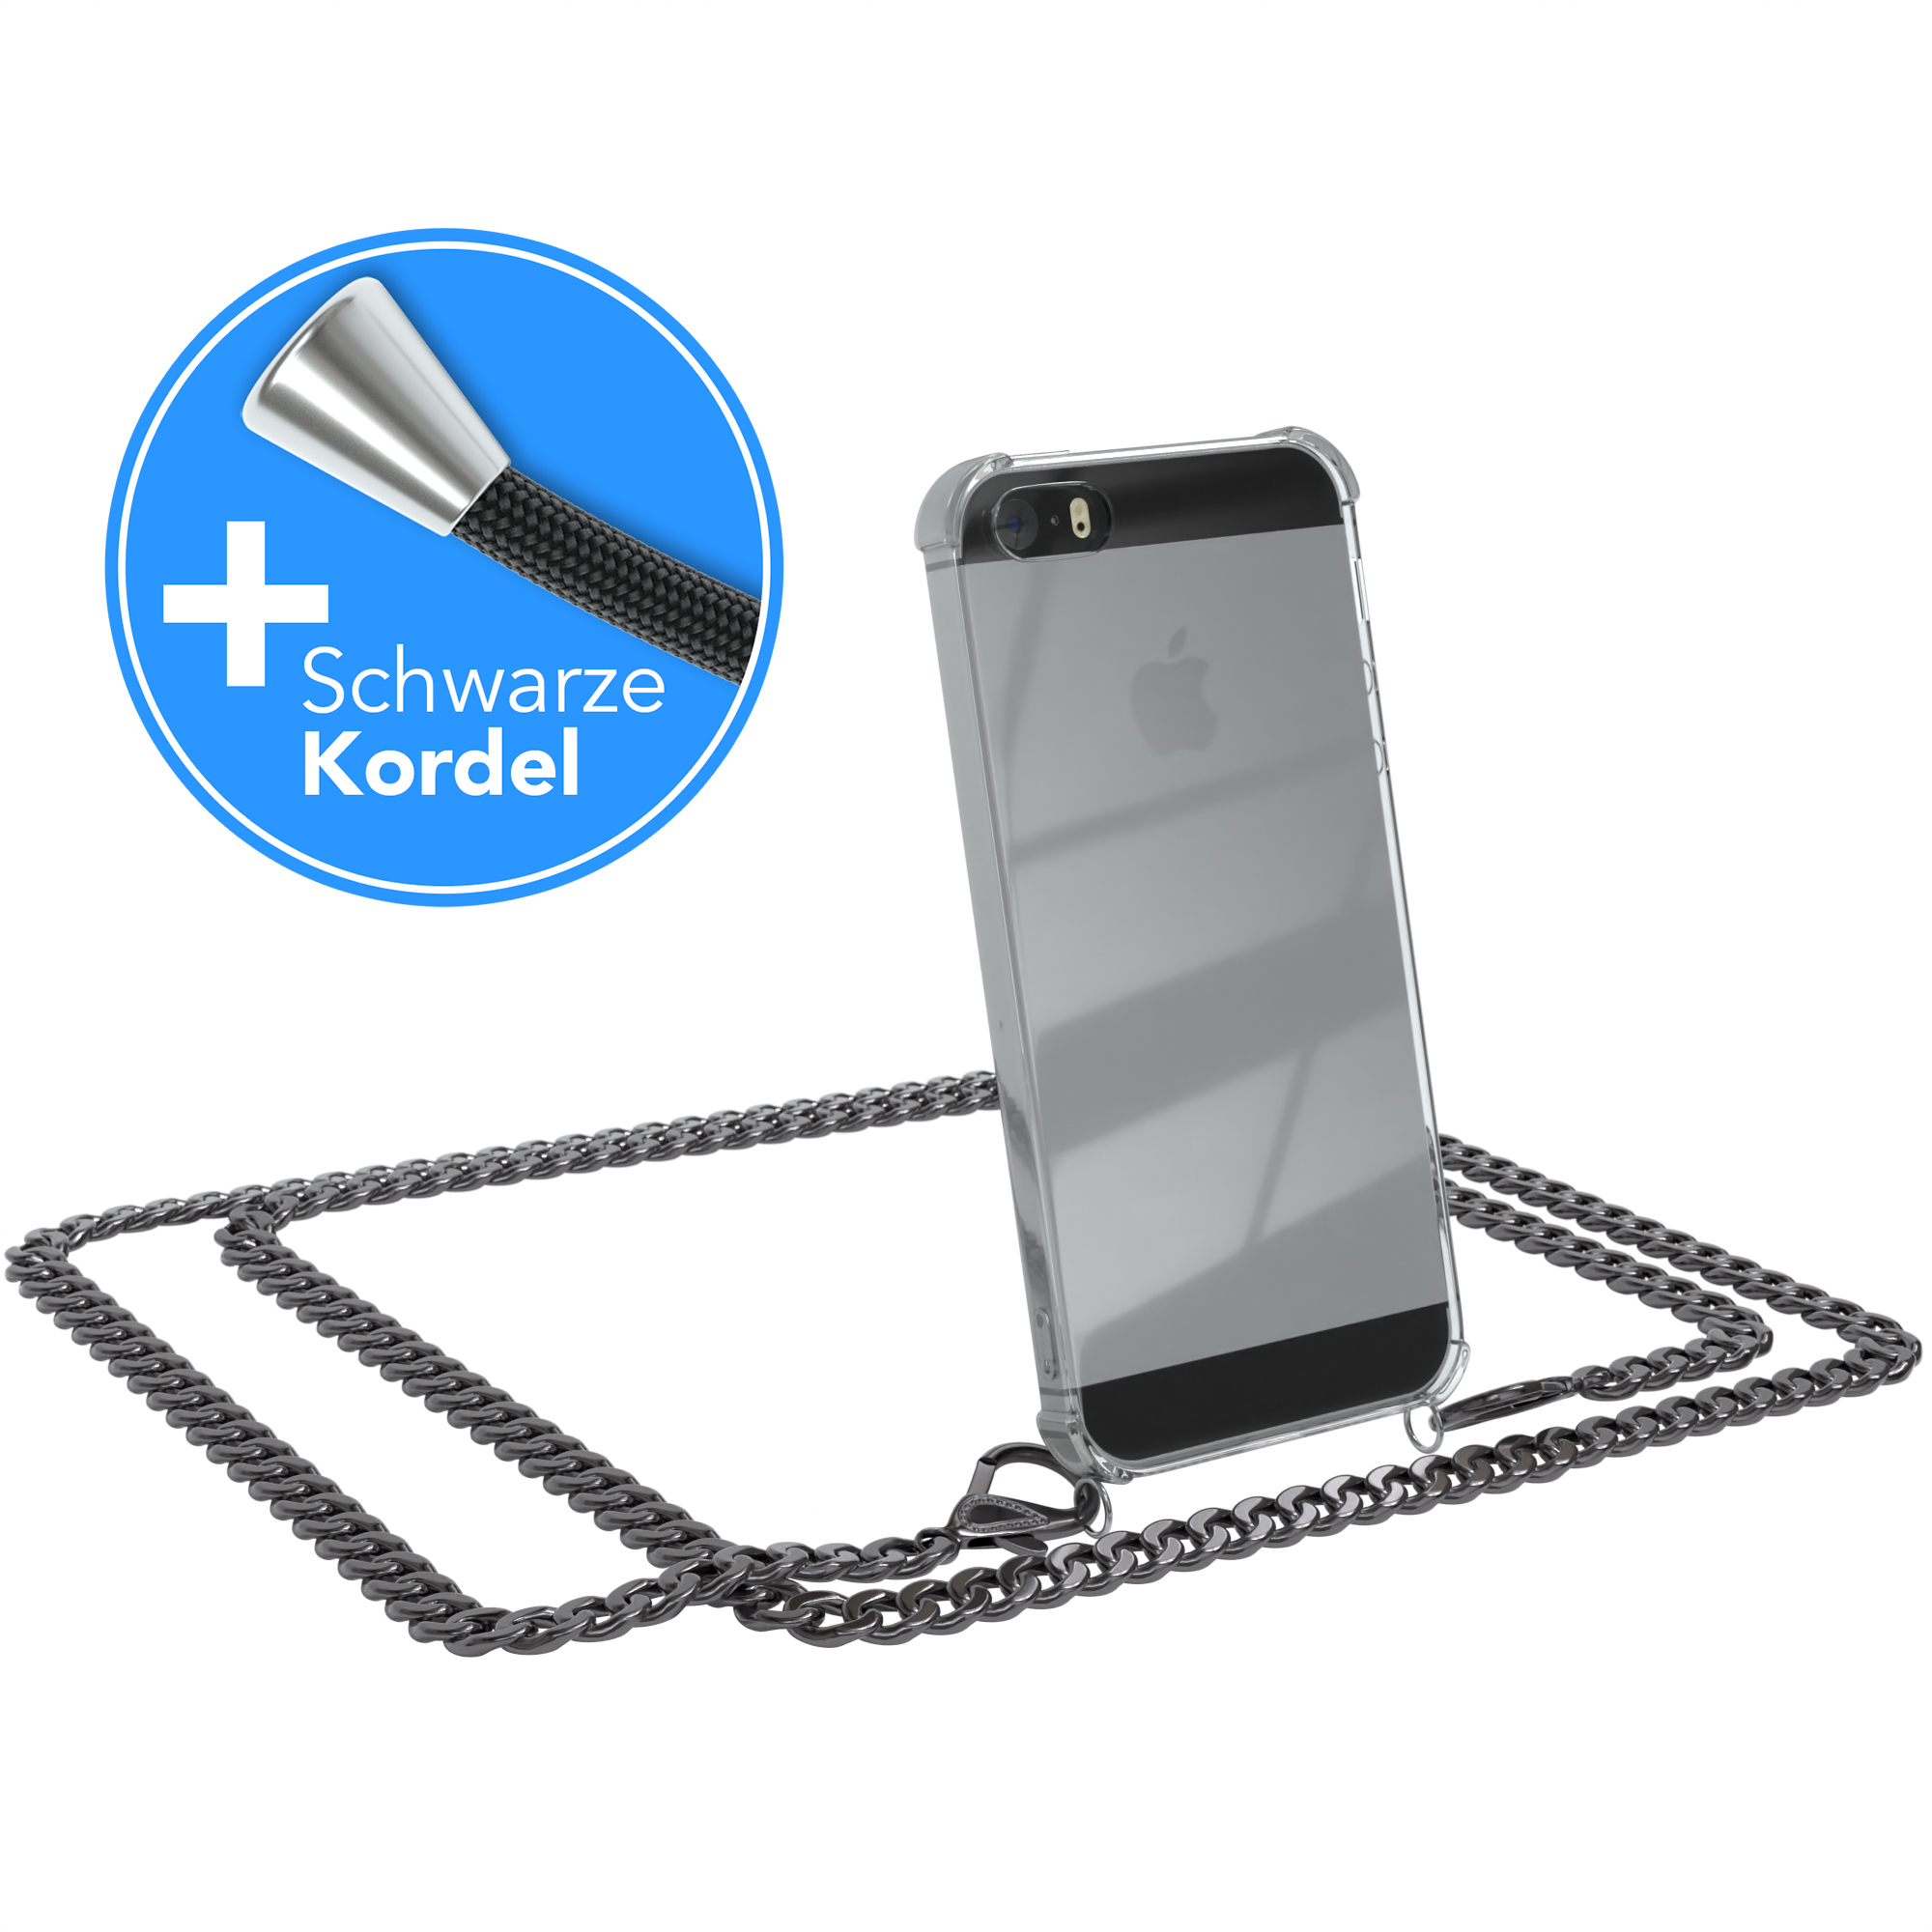 EAZY CASE Handykette SE Anthrazit Umhängetasche, 2016, Grau iPhone Schwarz, Kordel + Apple, / 5S, iPhone extra 5 Metall